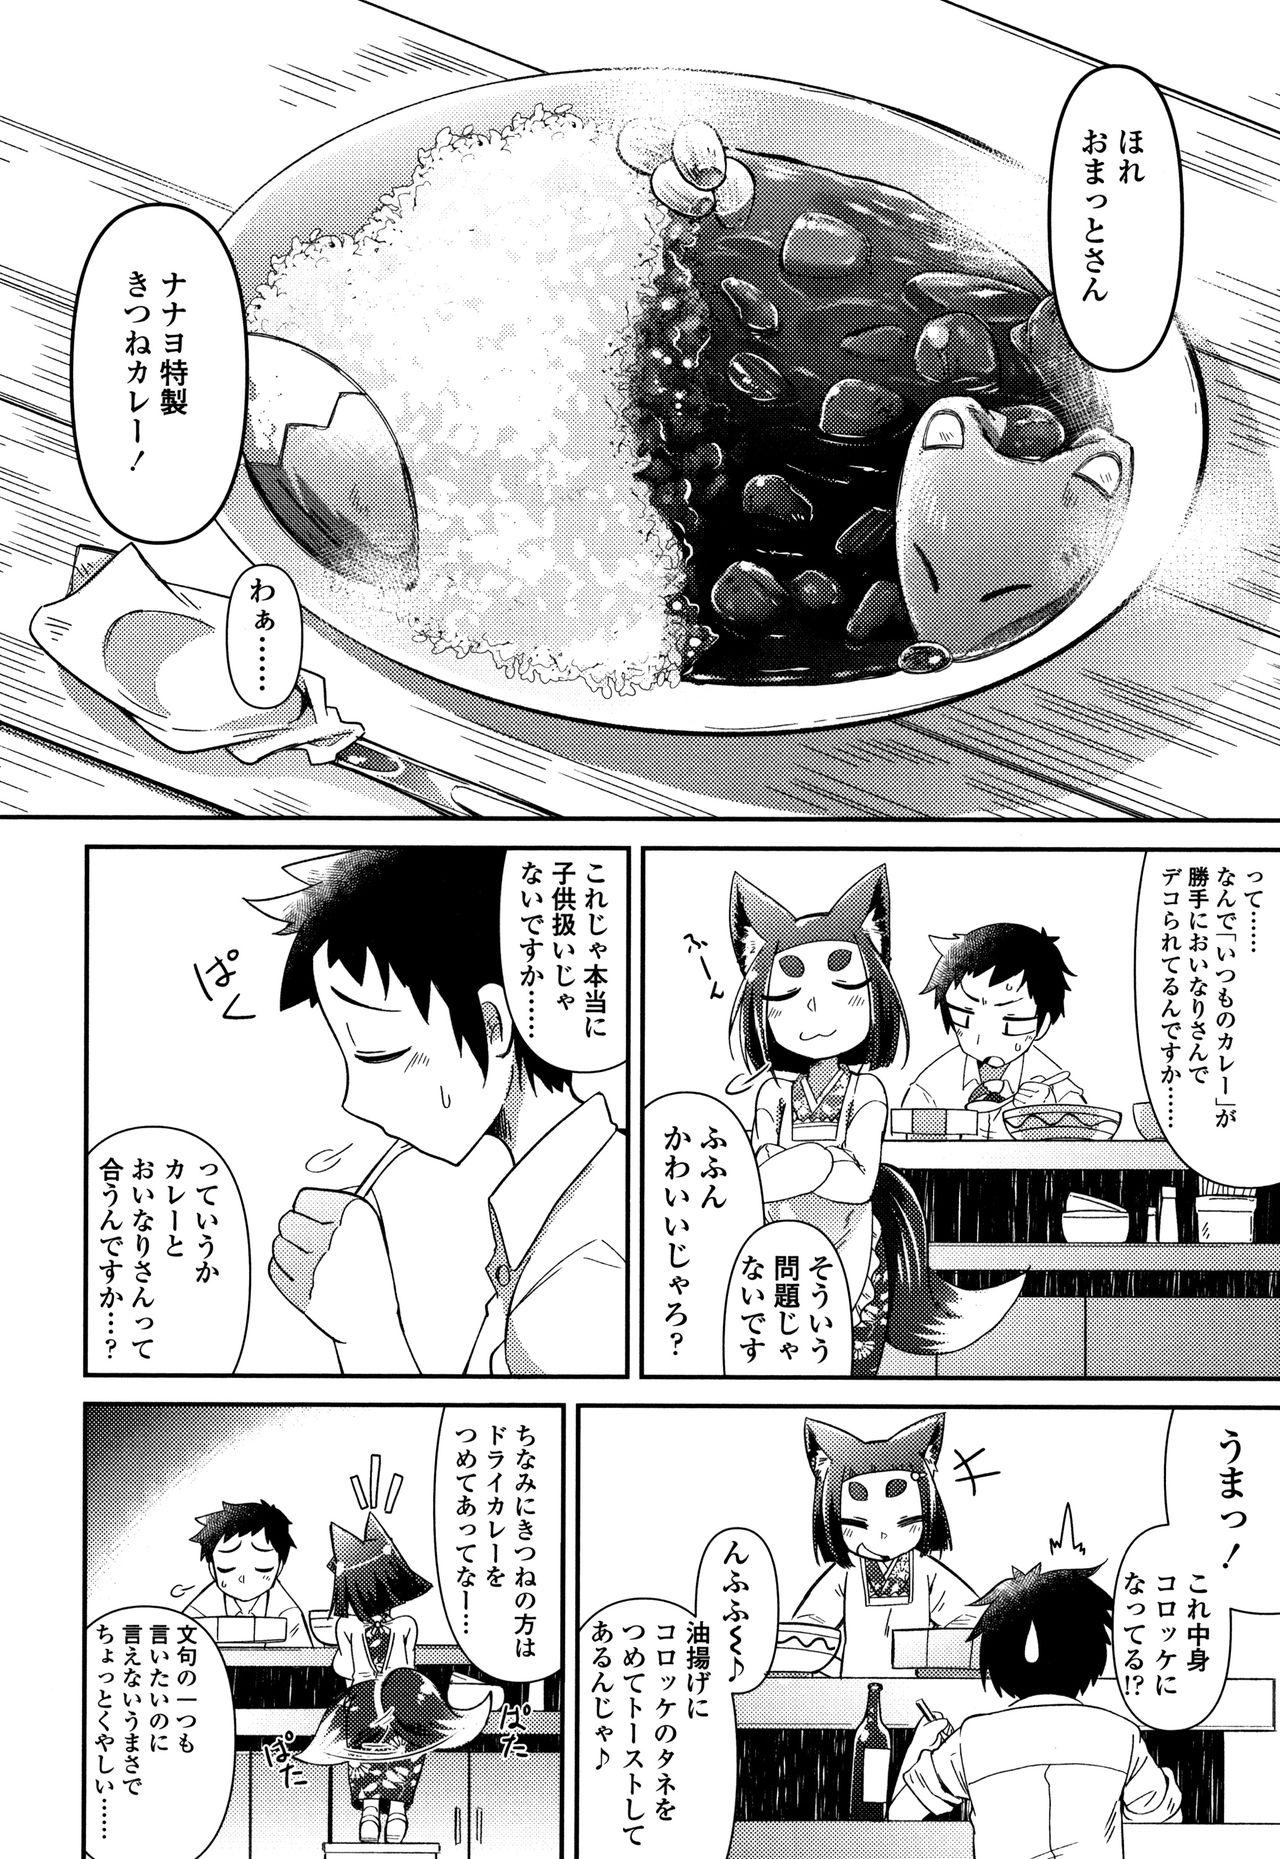 Sextoys Youkai Koryouriya ni Youkoso - Welcome to apparition small restaurant Chupada - Page 11